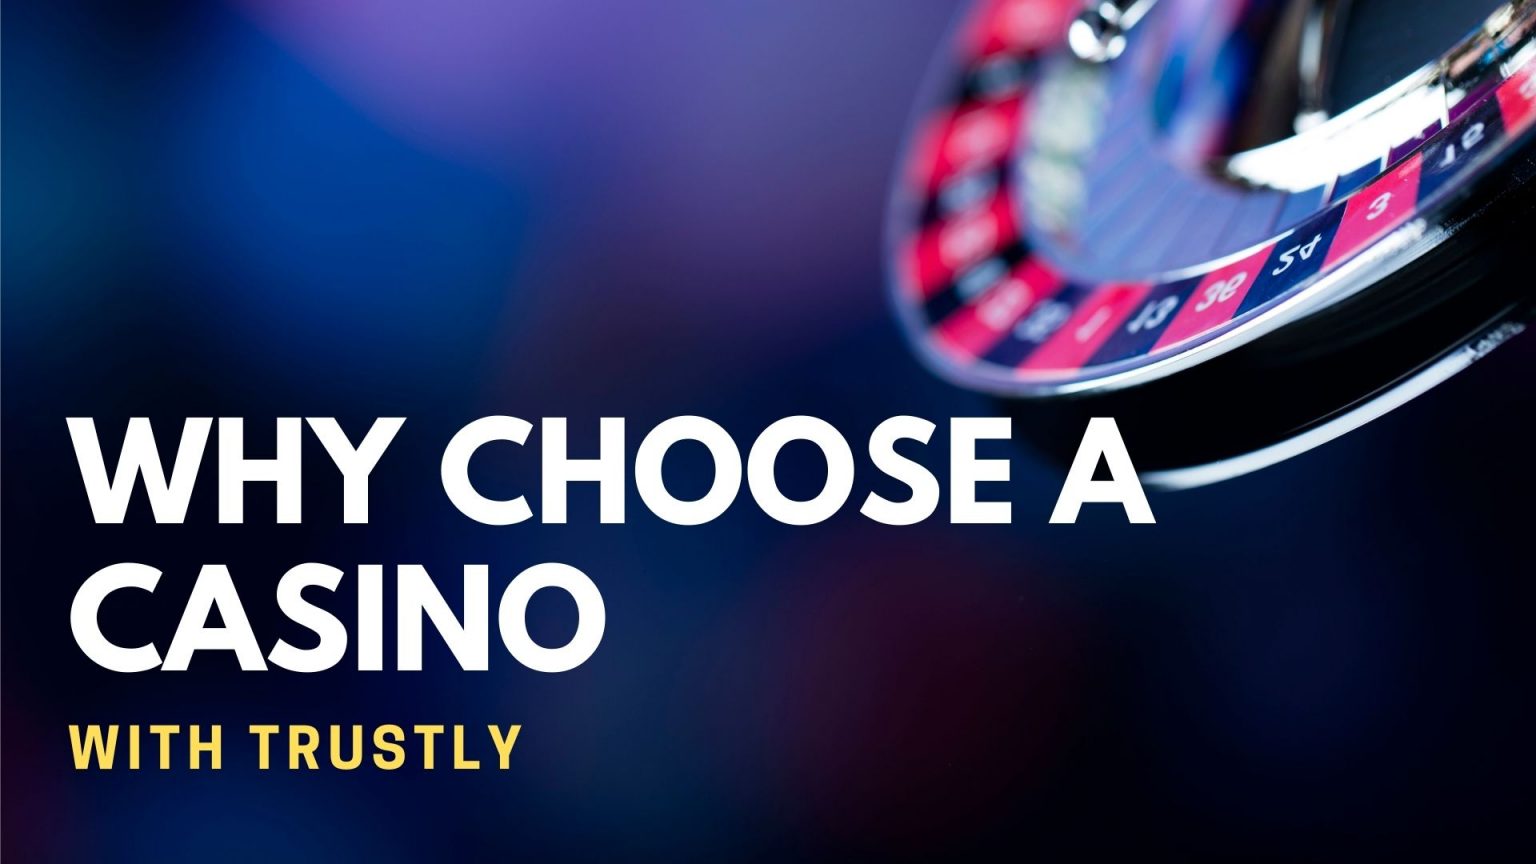 casino online trustly